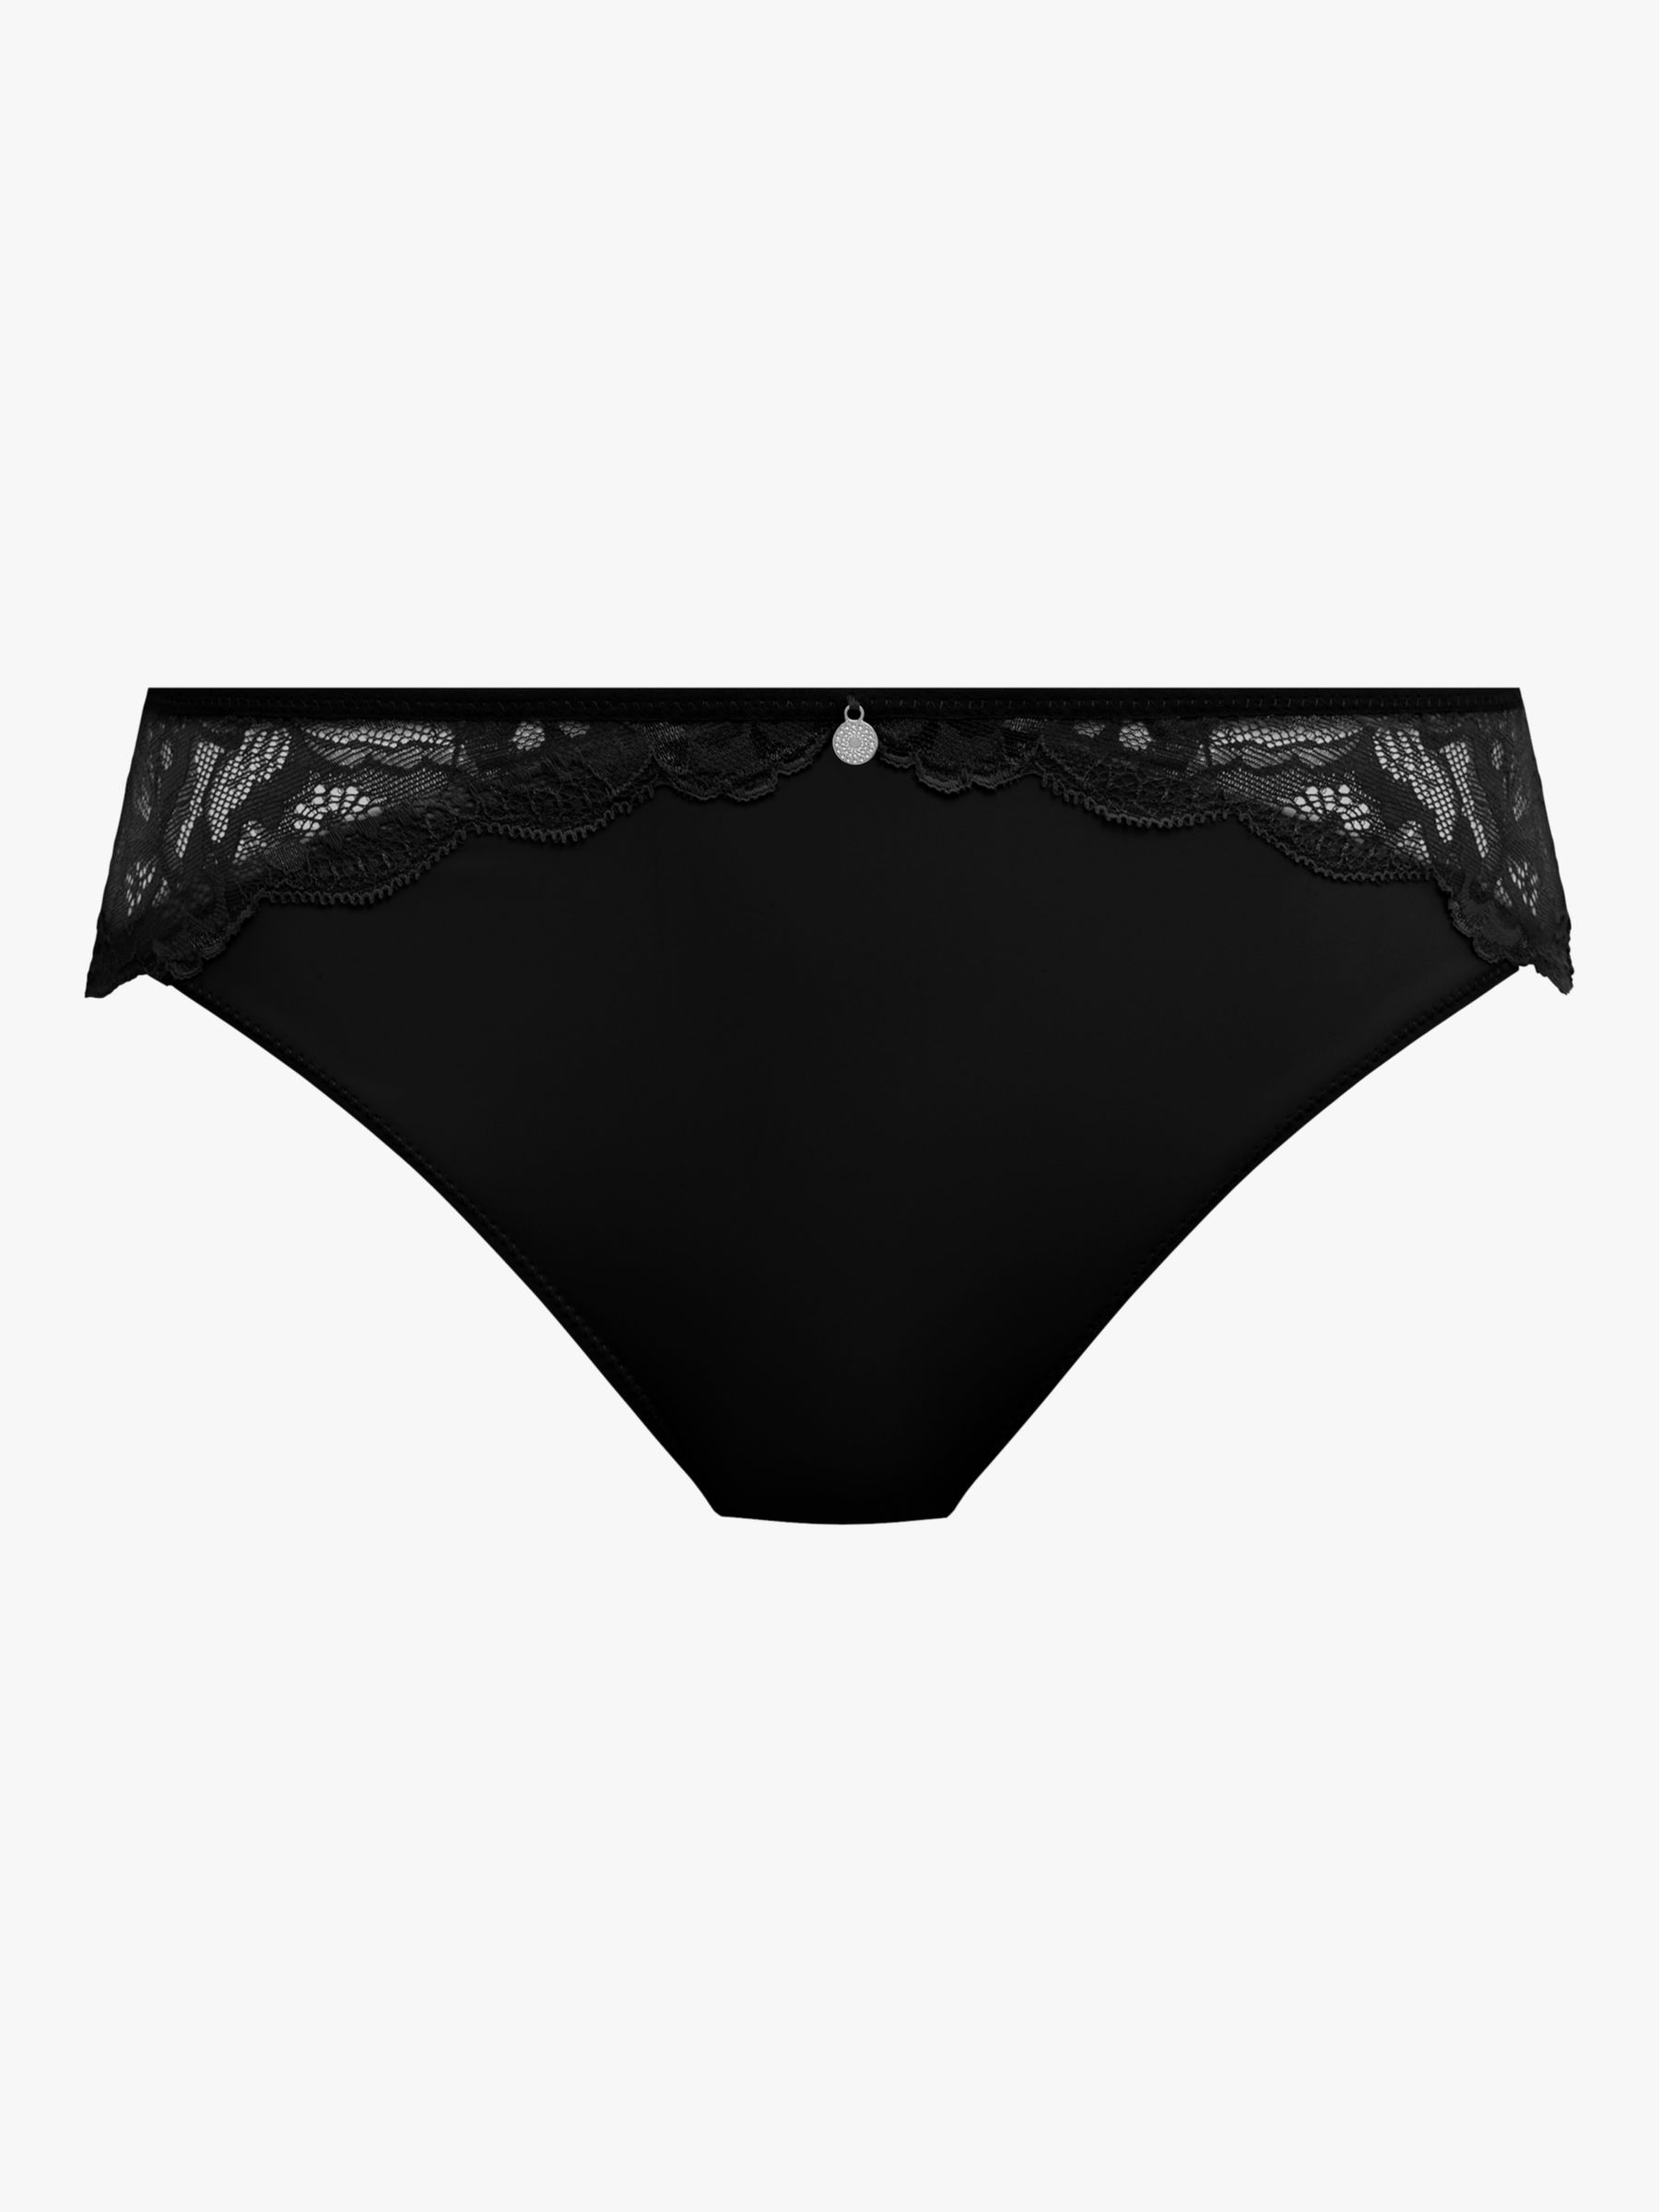 Fantasie Reflect Lace Detail Bikini Knickers, Black, S